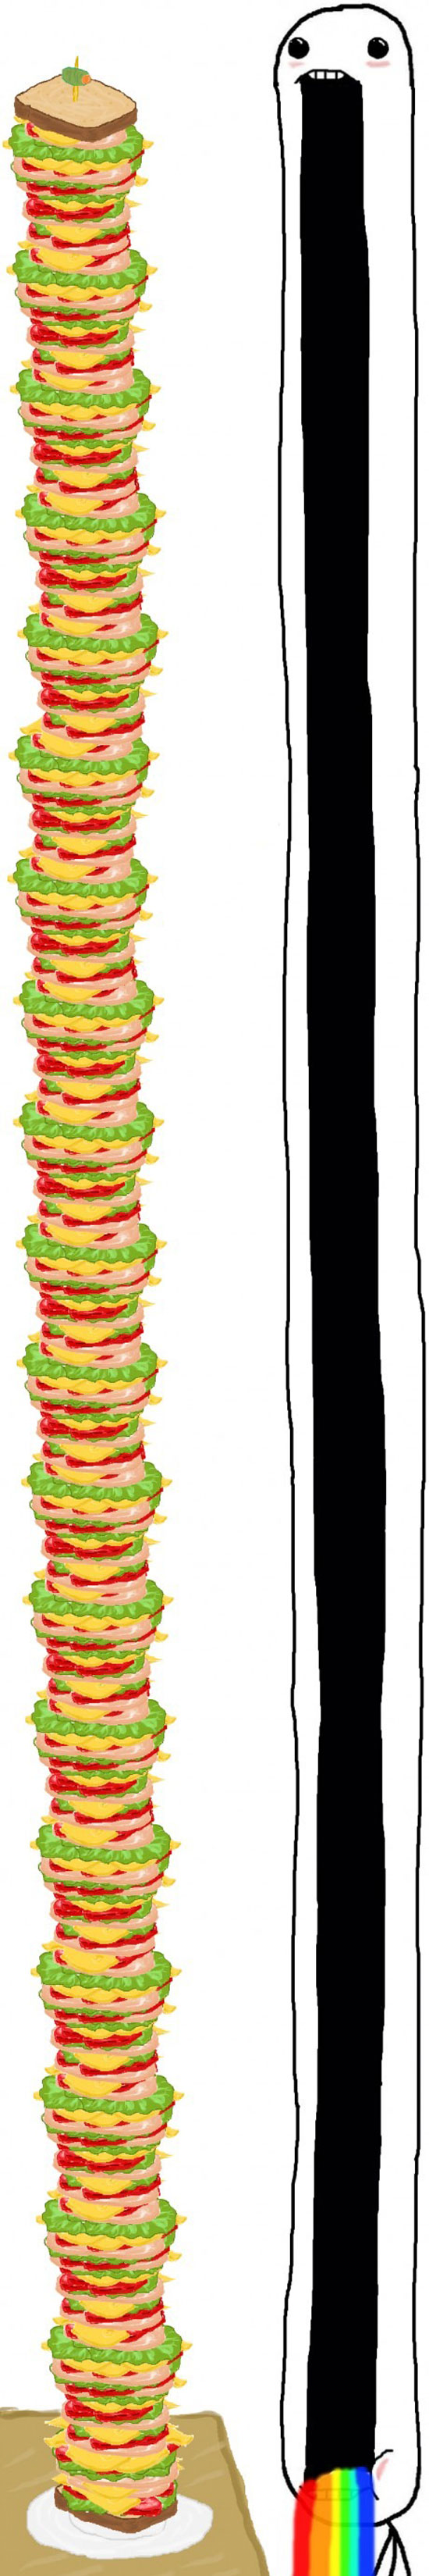 big meme burger